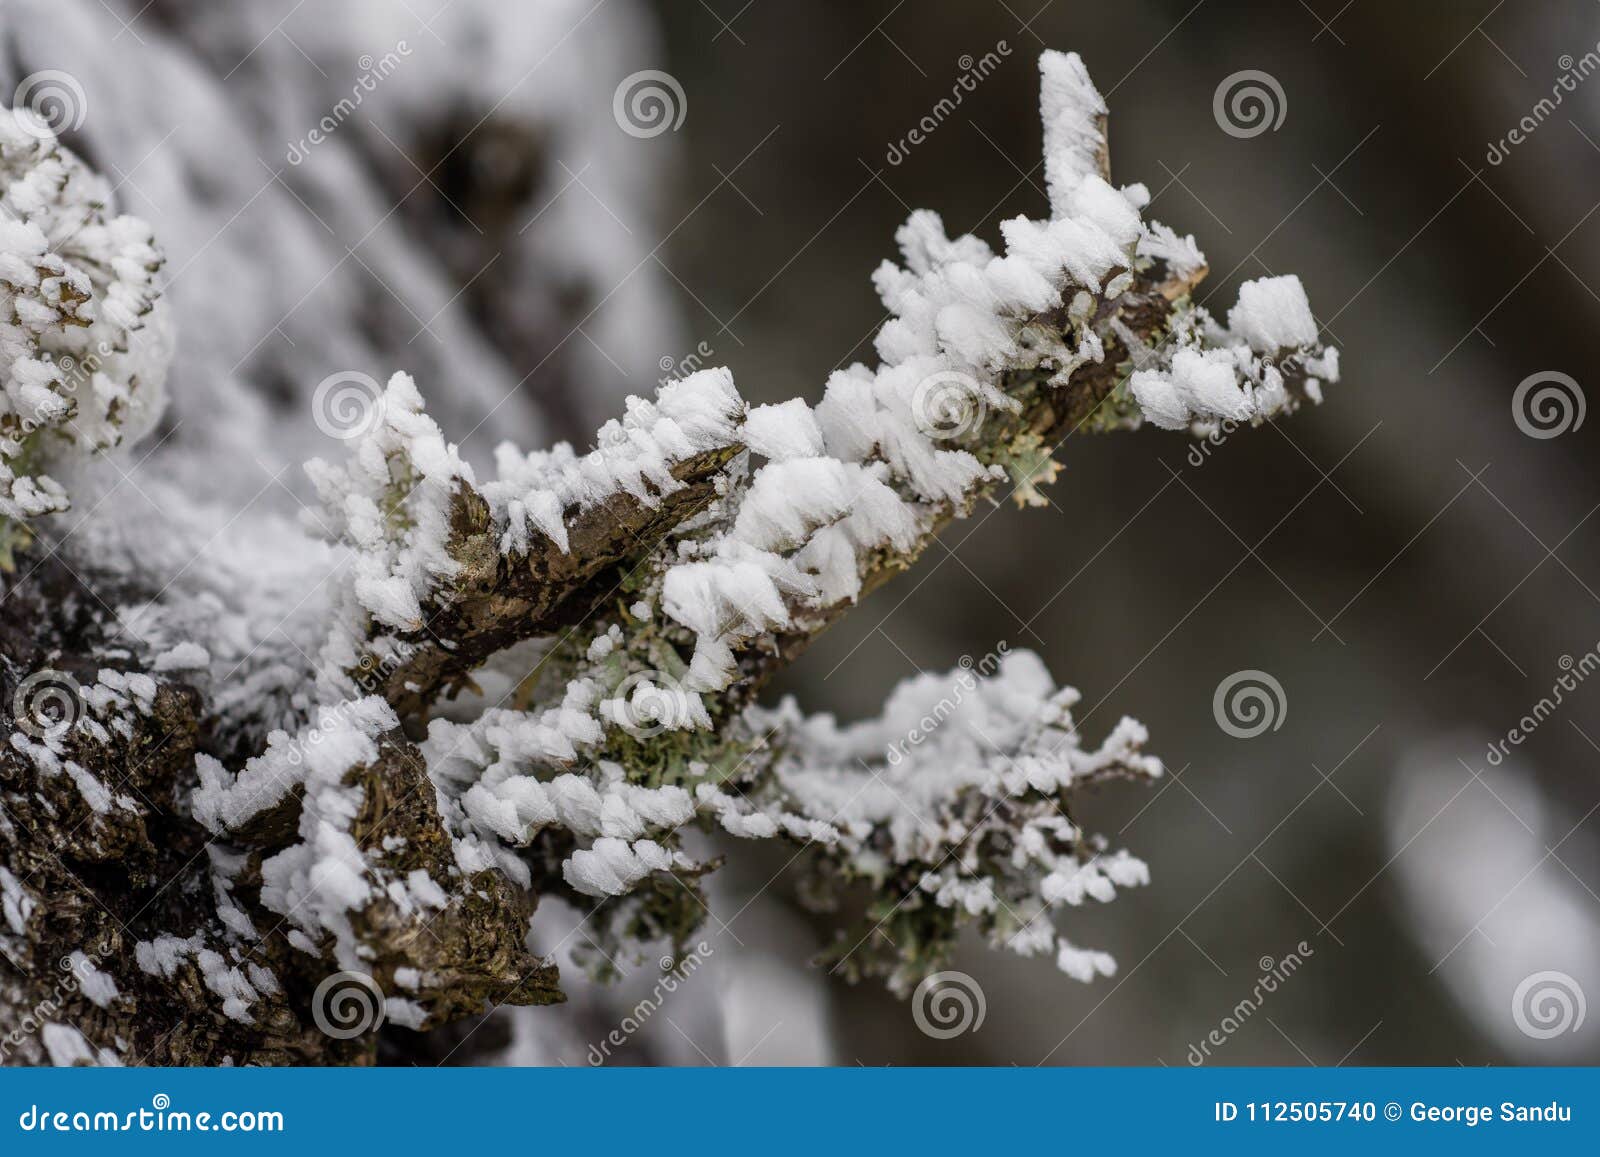 Moss Vegetation in Winter Season Stock Photo - Image of season, winter ...